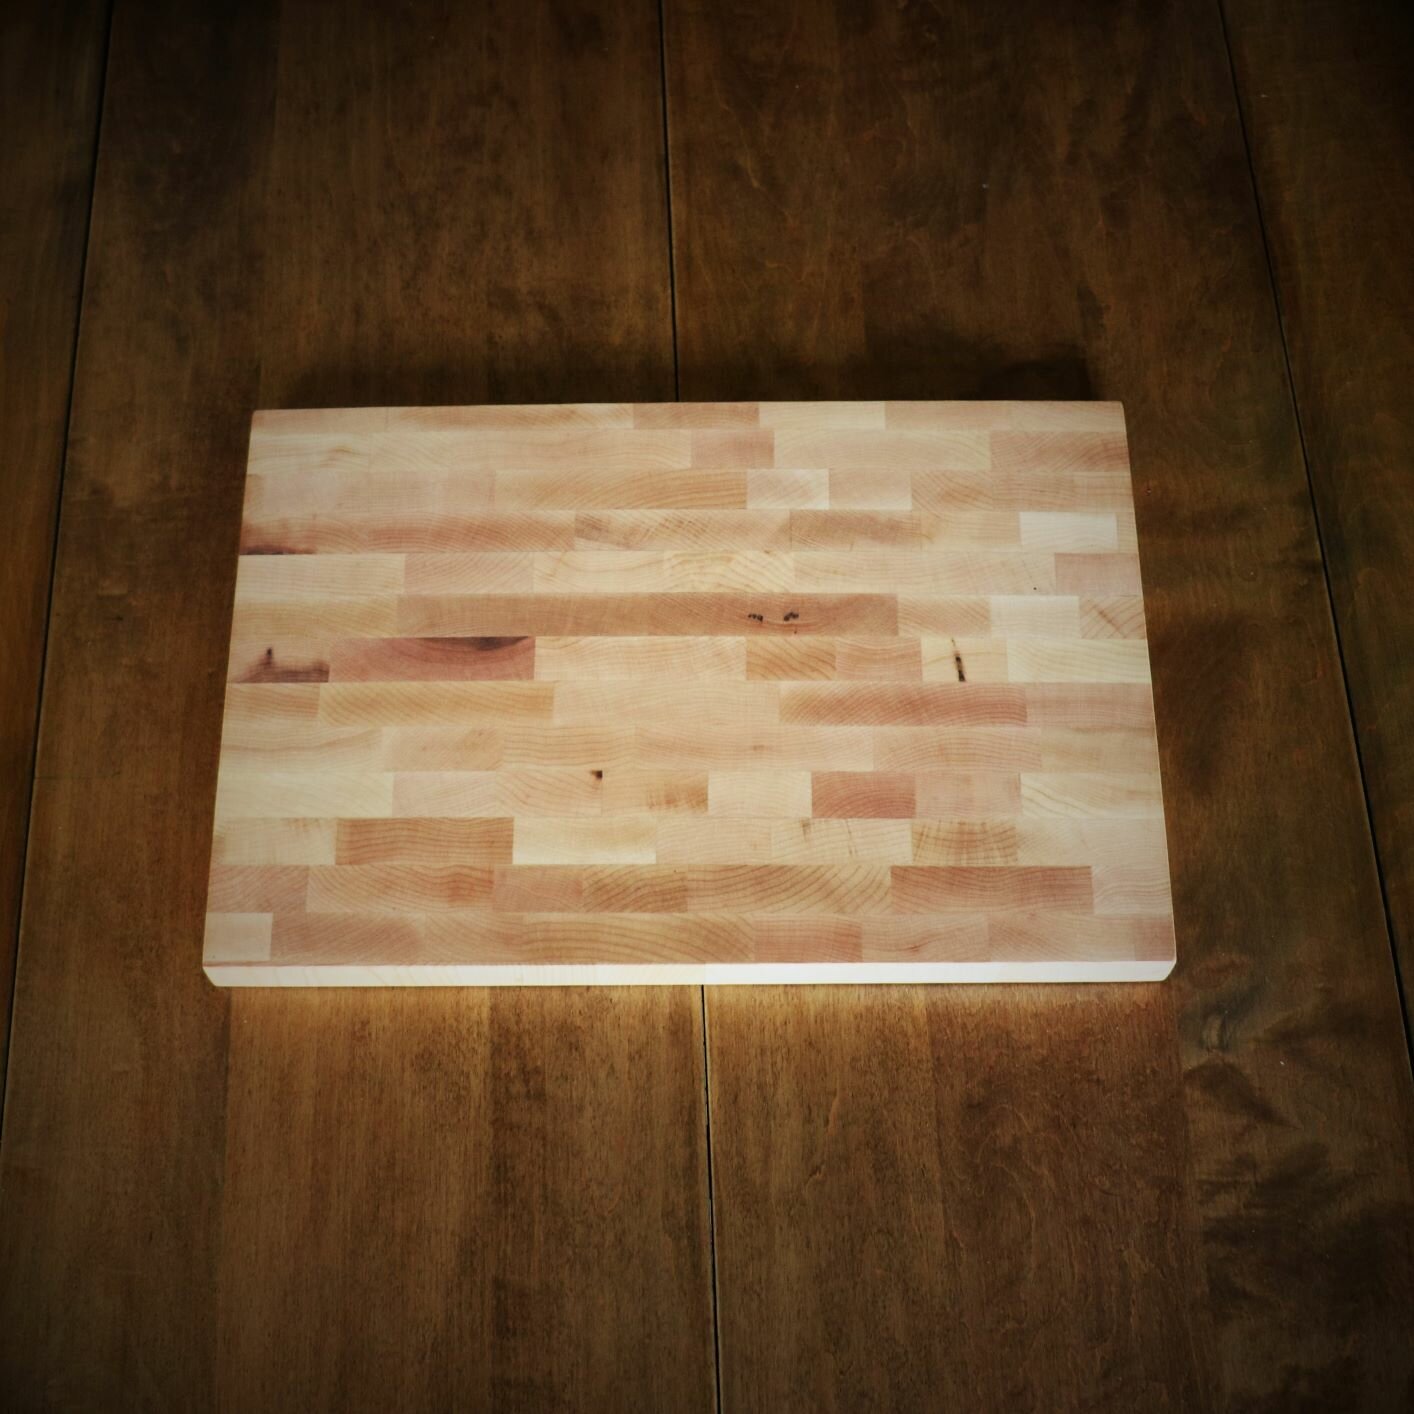 maple wood chopping board